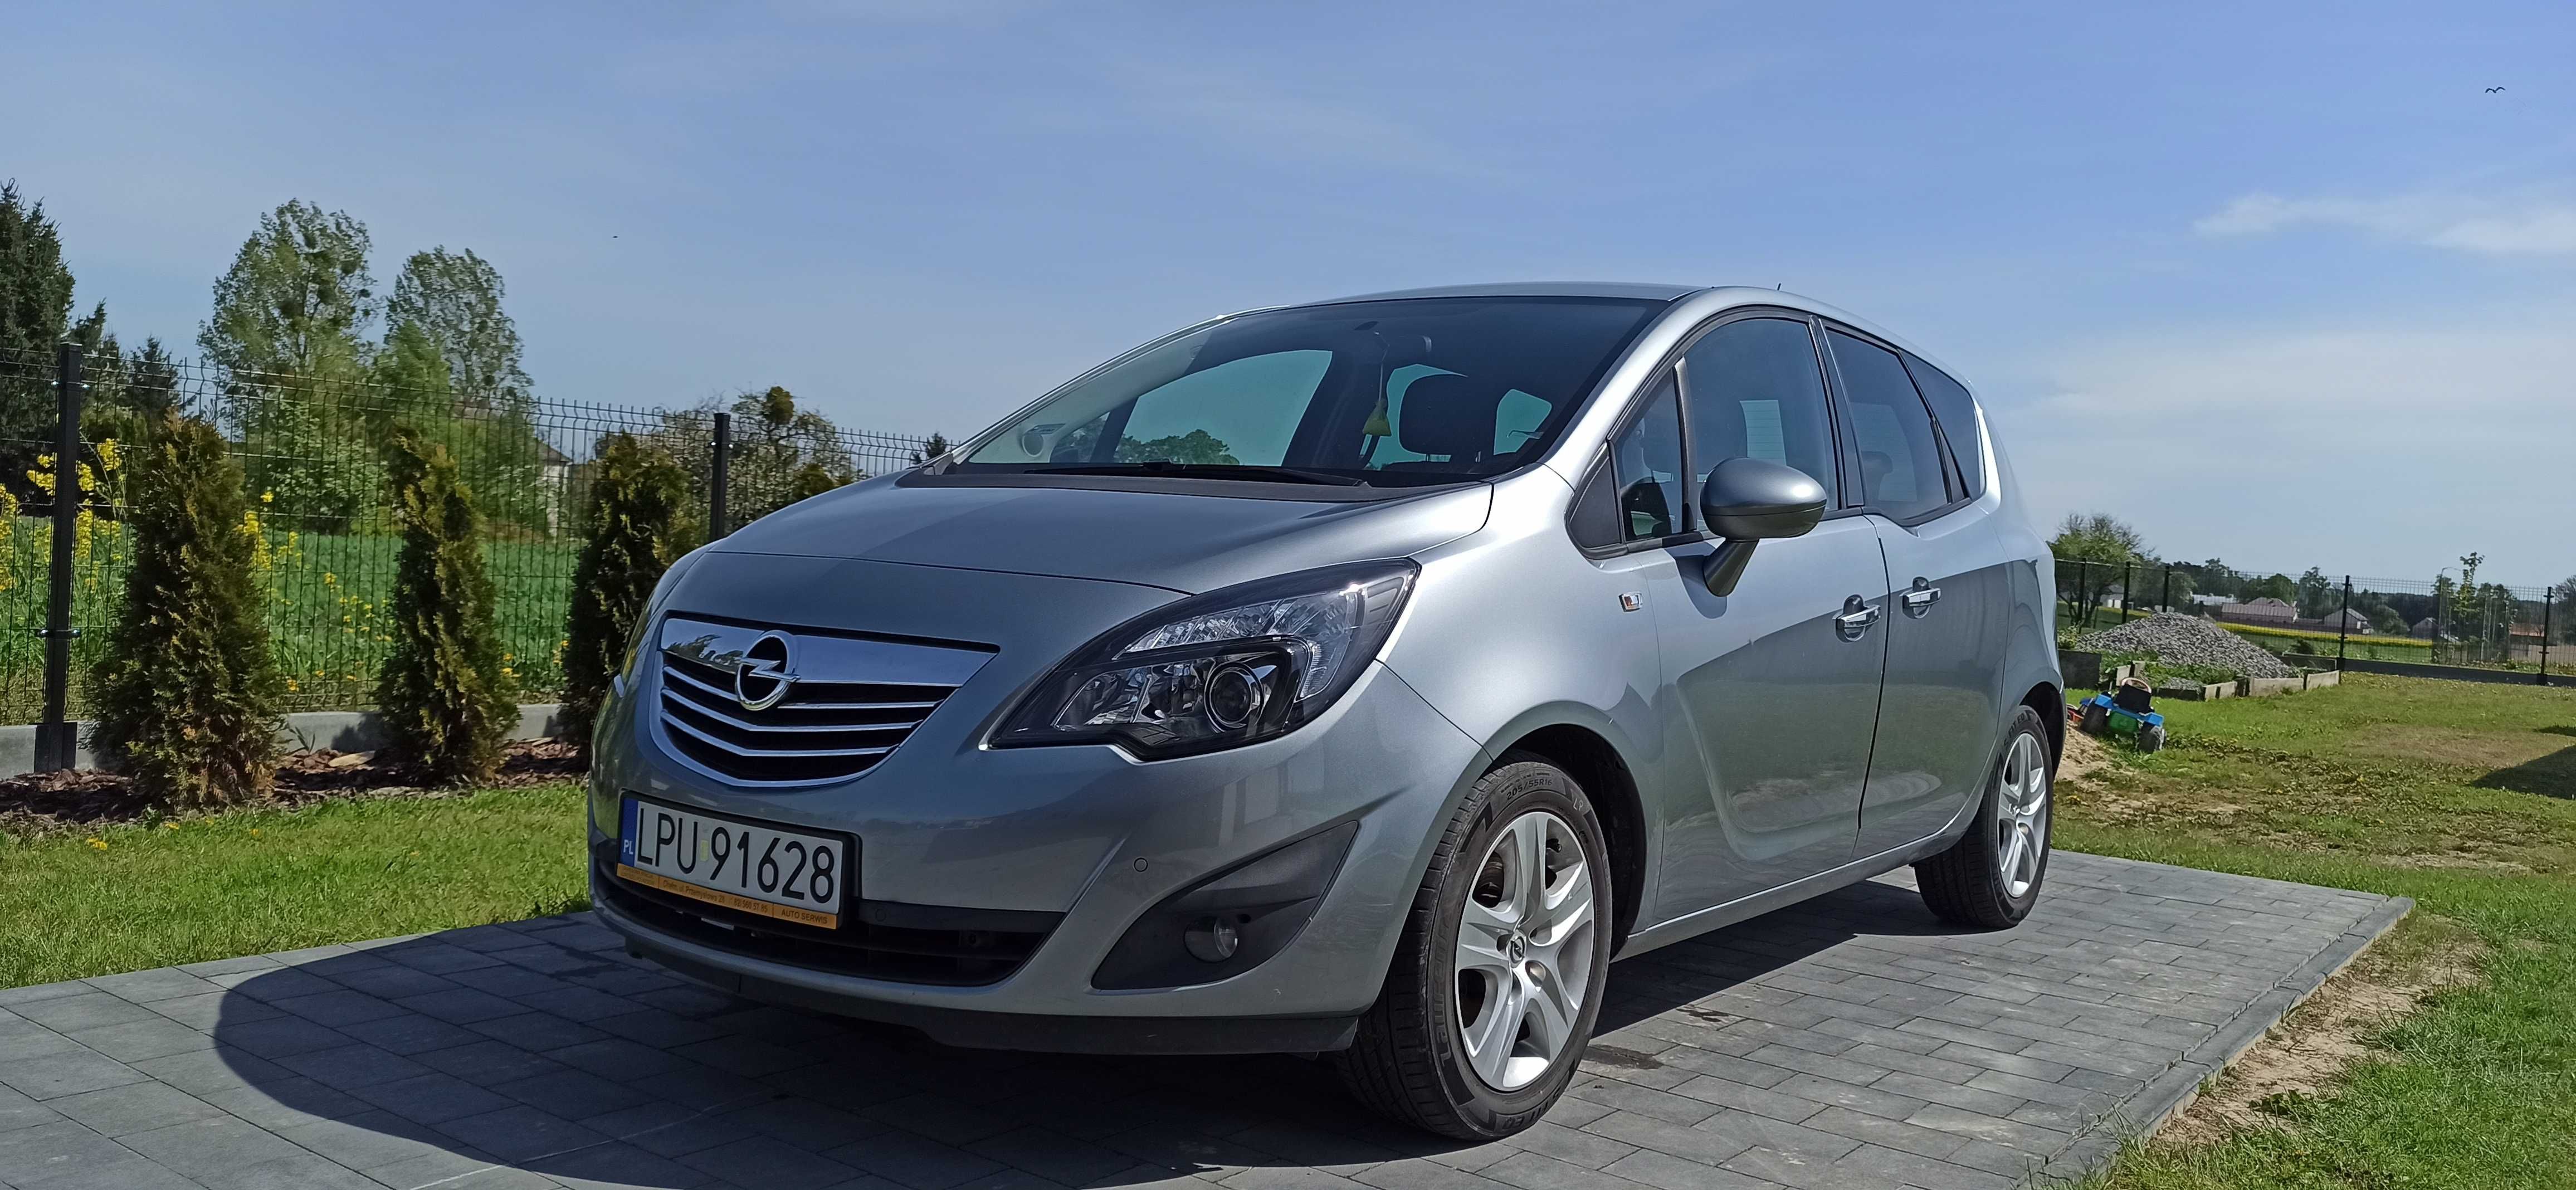 Opel Meriva B 1.4 TURBO, 2011r